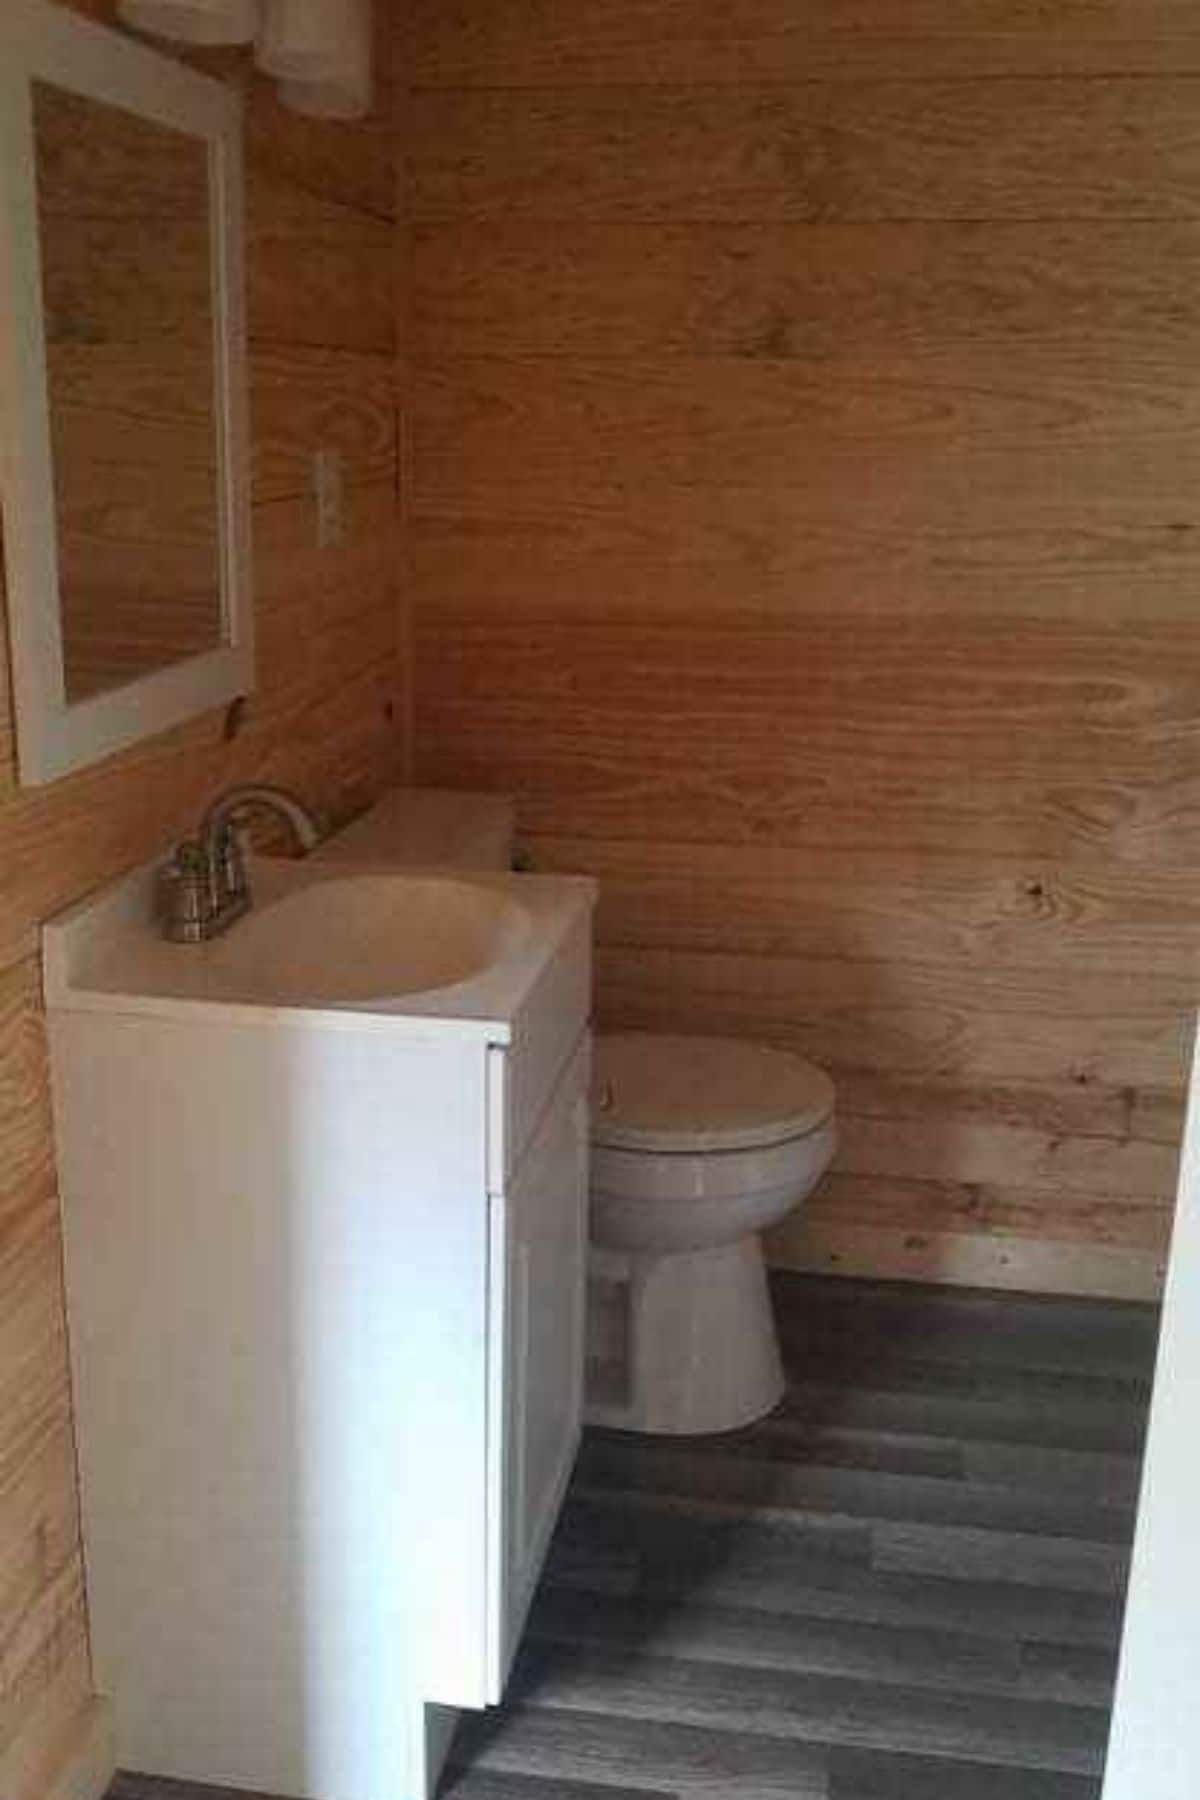 View into bathroom with vanity and toilet from door